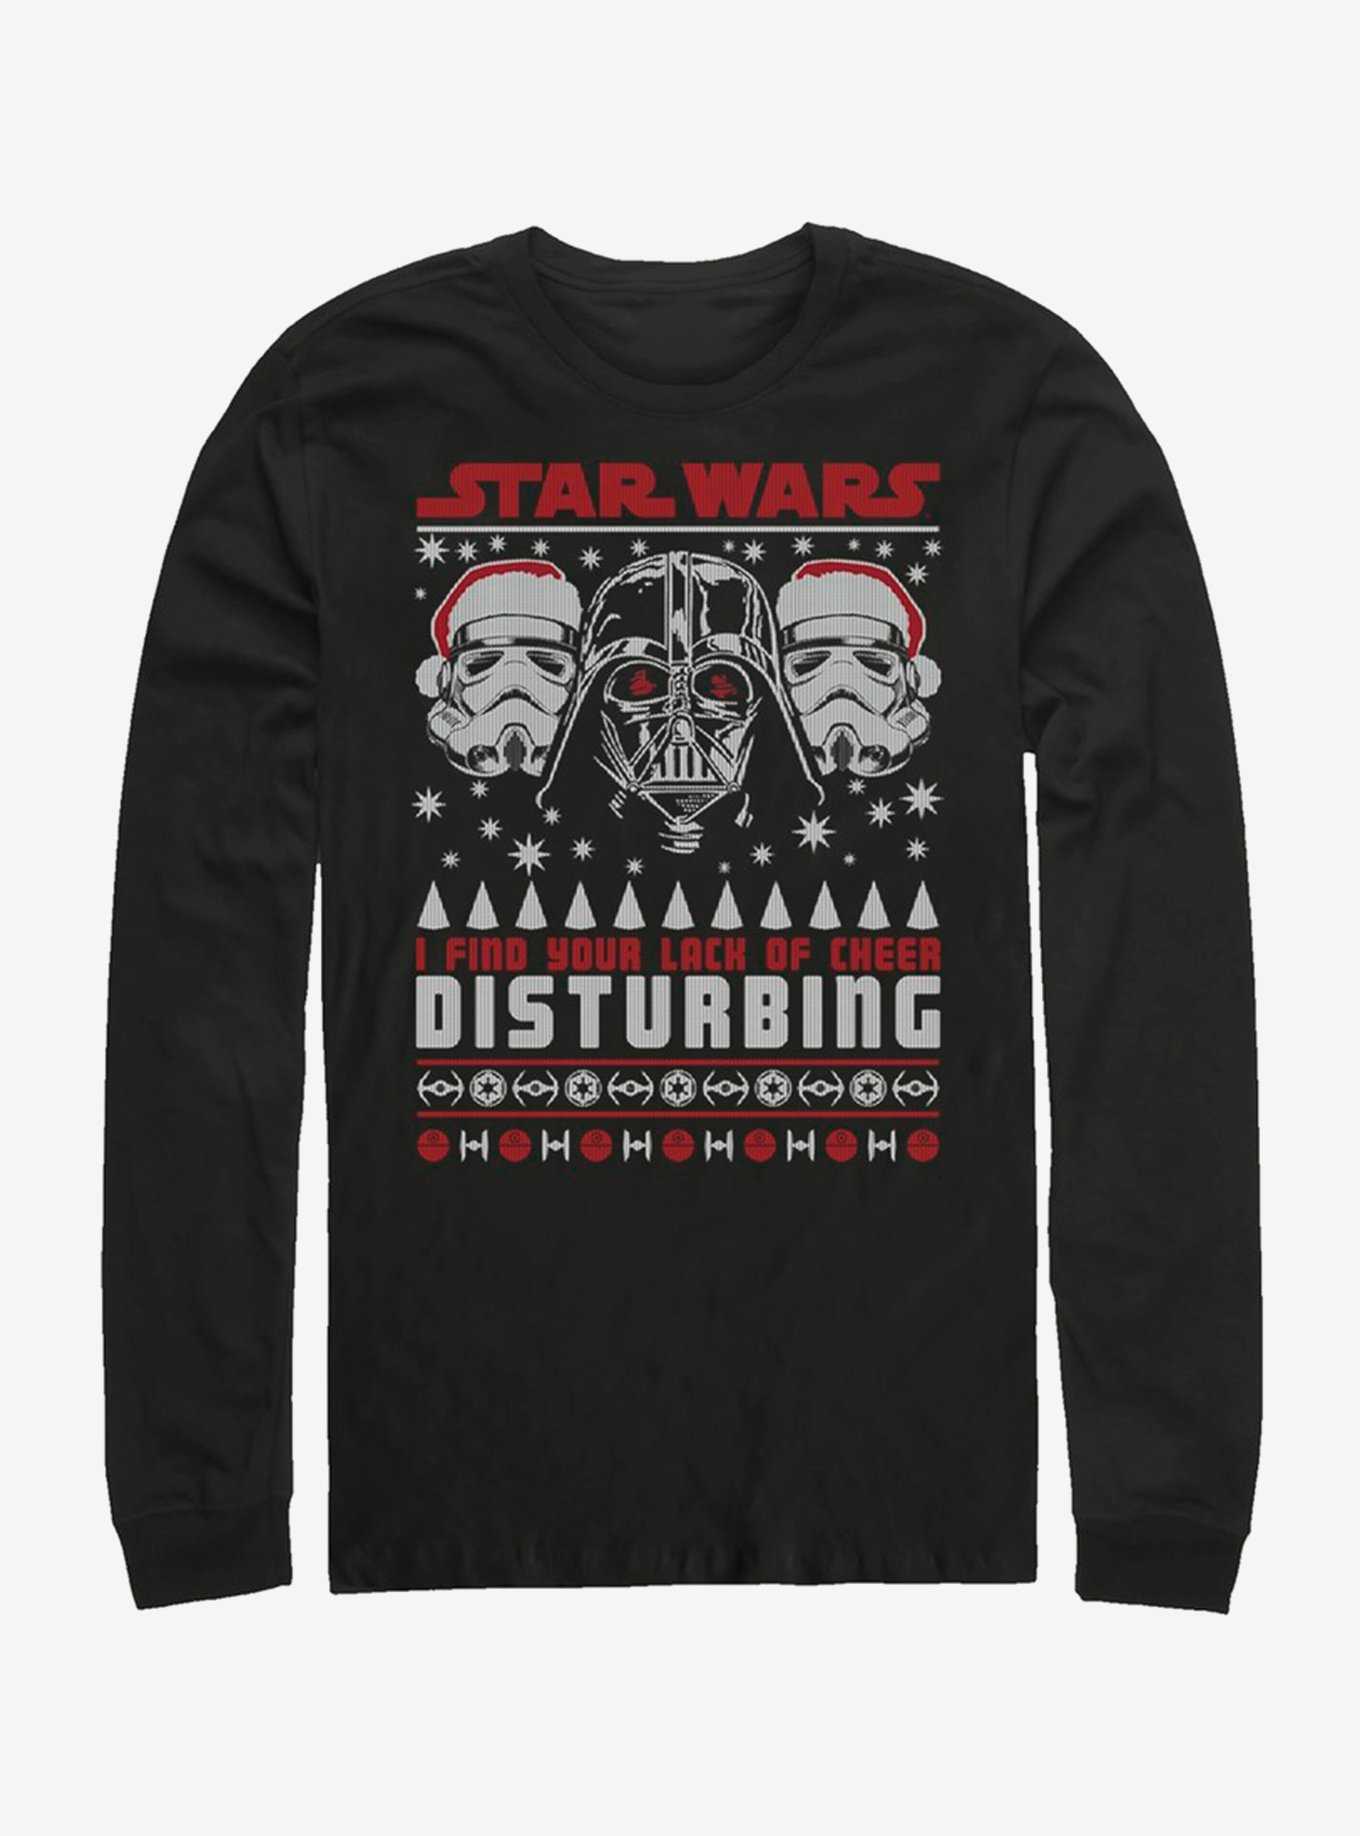 Star Wars Disturbing Sweater Long-Sleeve T-Shirt, , hi-res